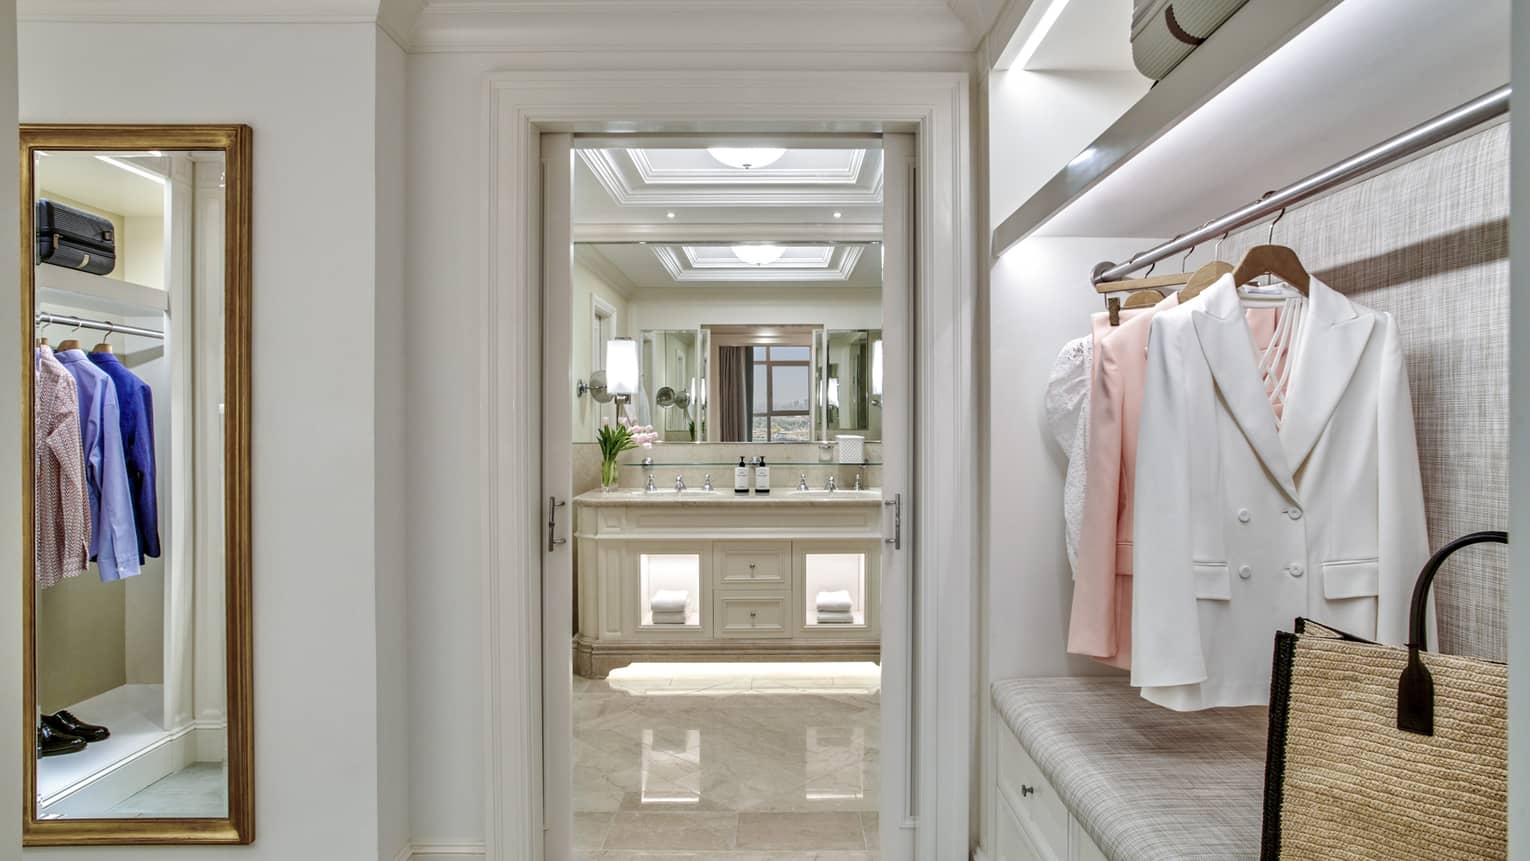 Guest room walk-in closet with full-length mirror, doorway to bathroom